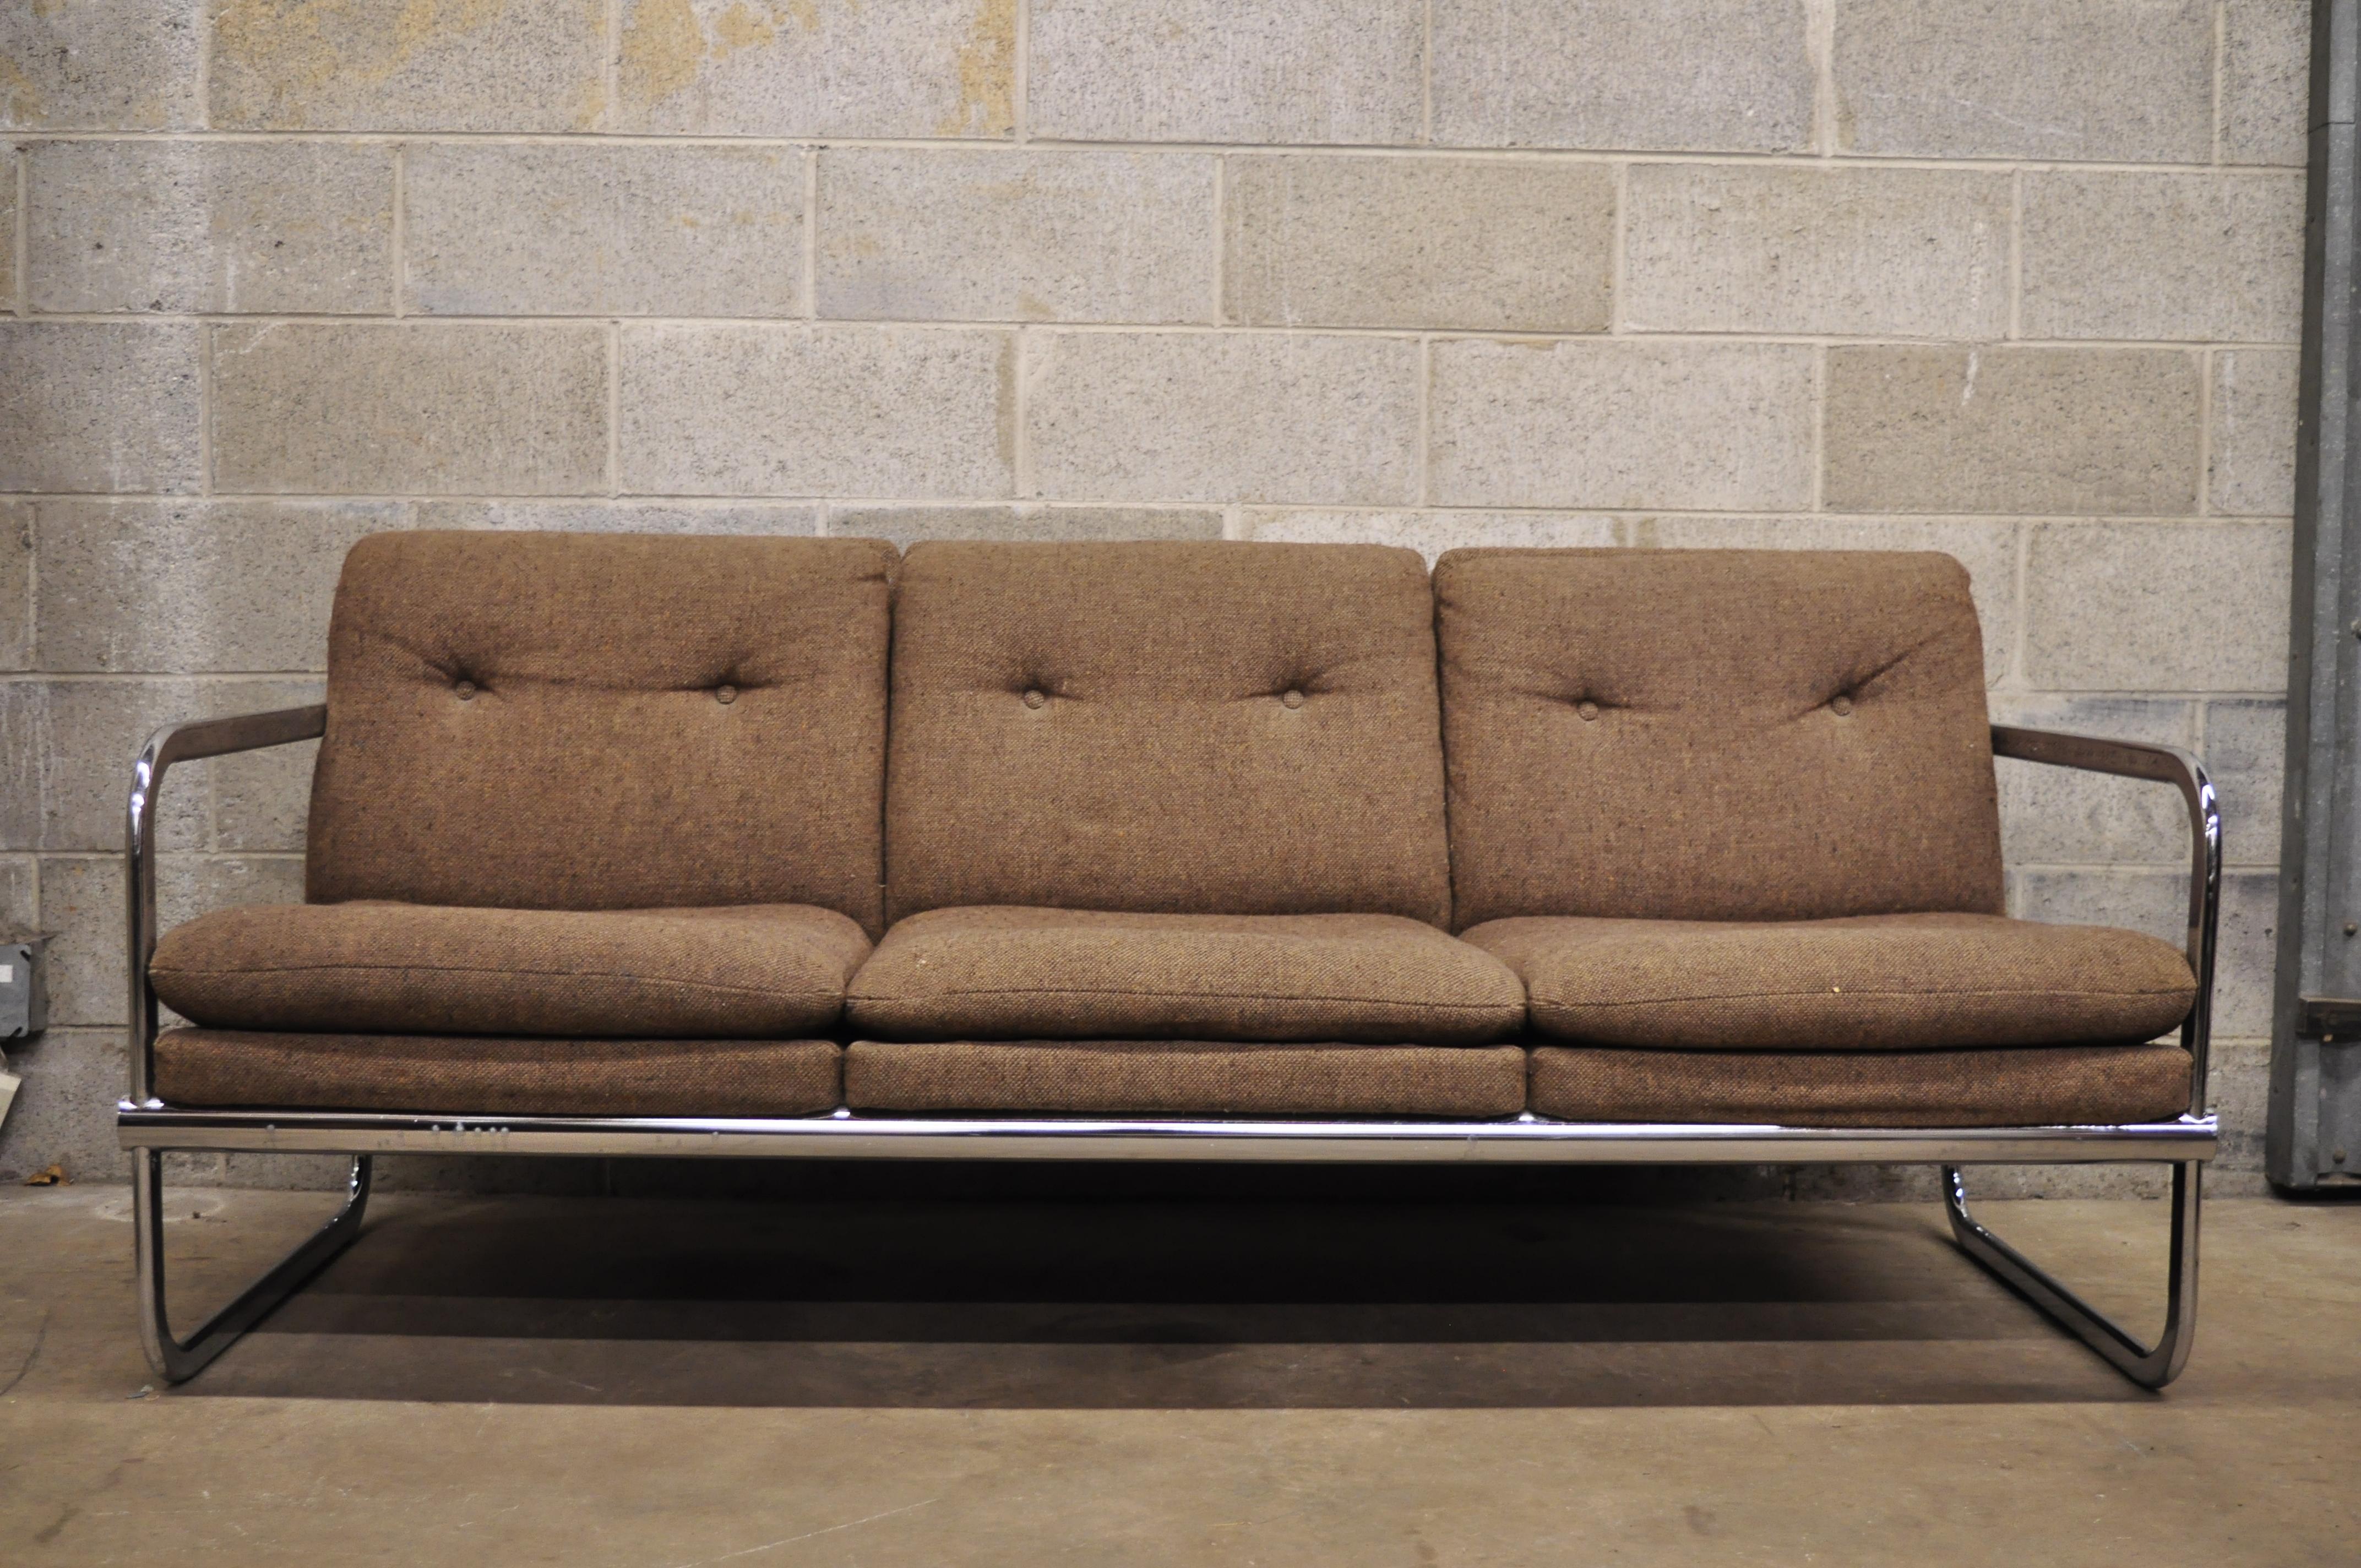 Mid-Century Modern chrome frame Milo Baughman style sofa by united chair. Item features chrome tubular rear support, chrome frame, sleek sculptural form, circa 1970. Measurements: 29